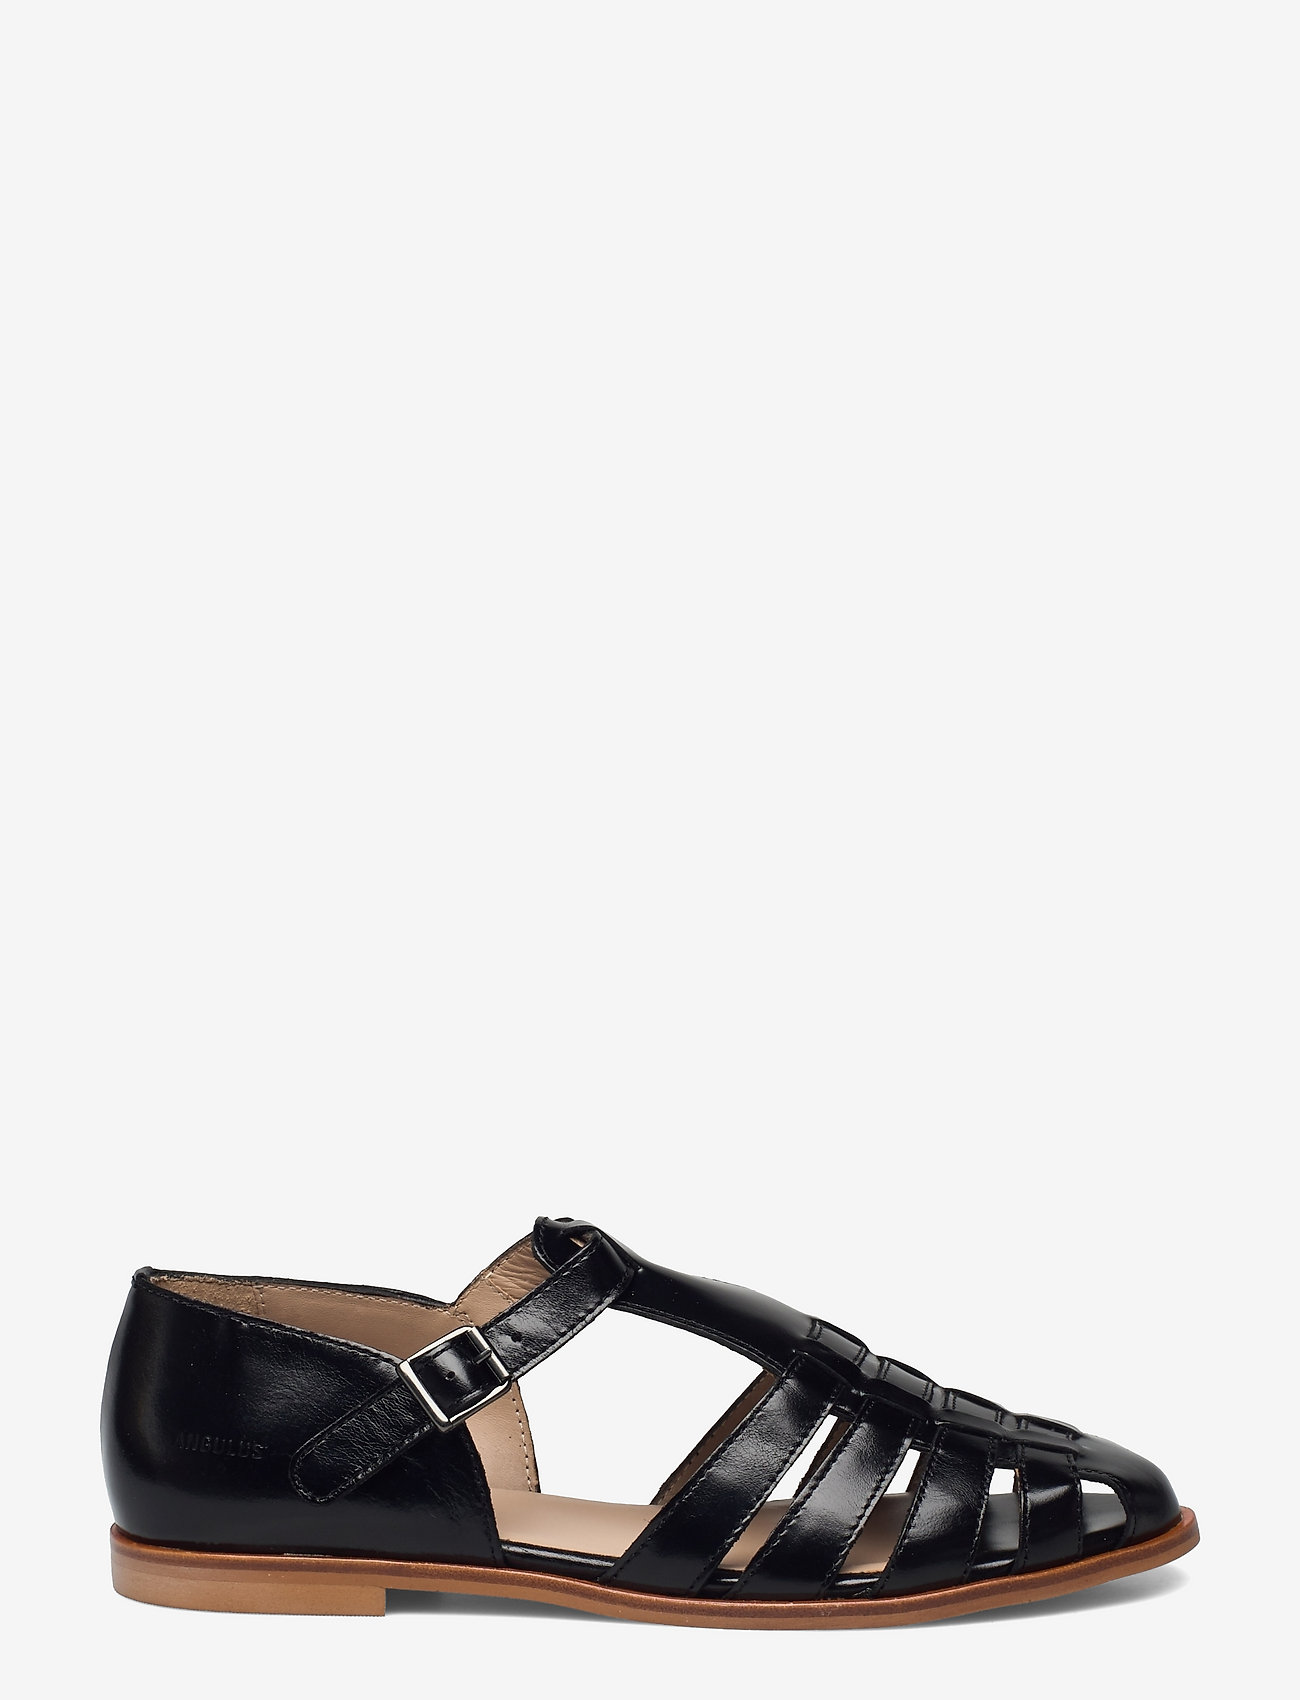 ANGULUS - Sandals - flat - closed toe - op - flade sandaler - 1835 black - 1